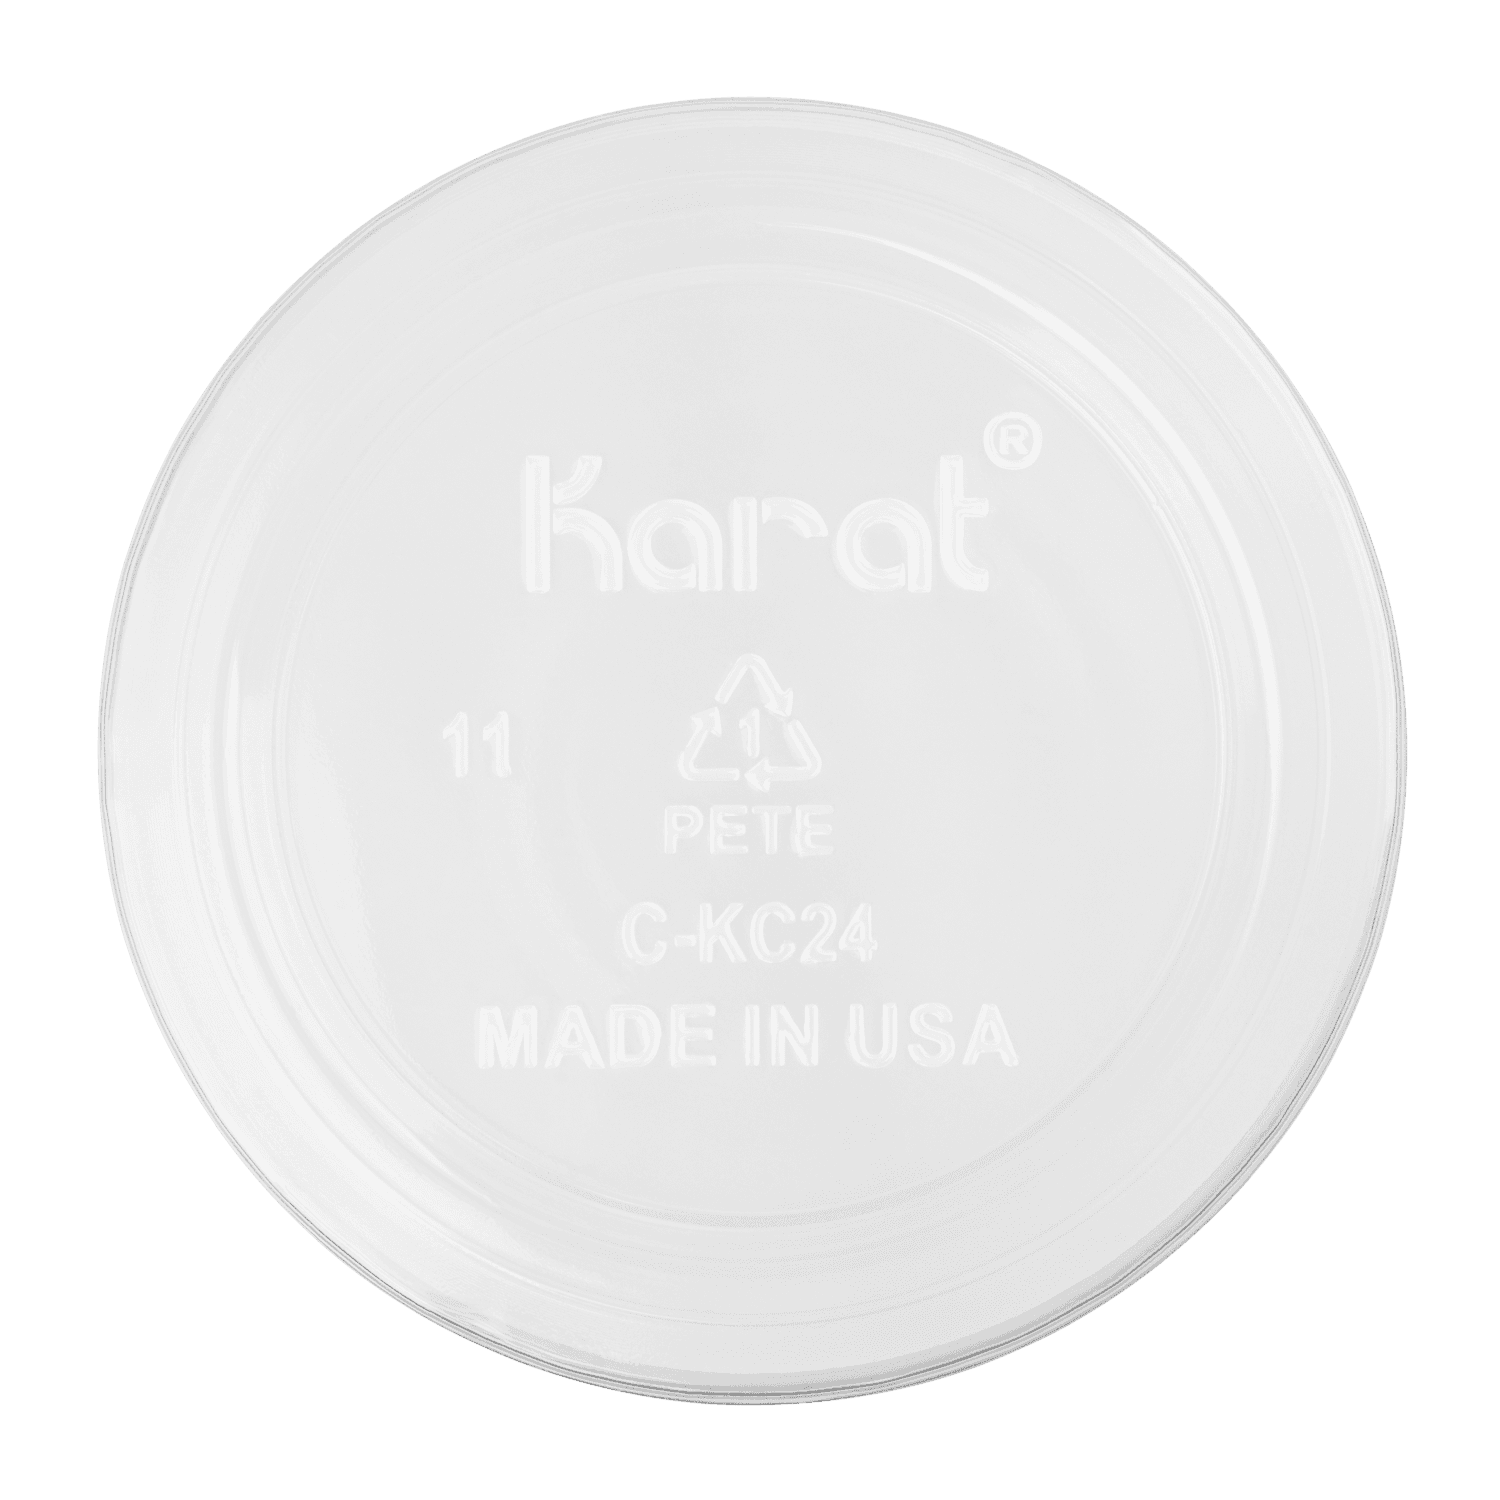 Karat 24oz PET Plastic Cold Cups